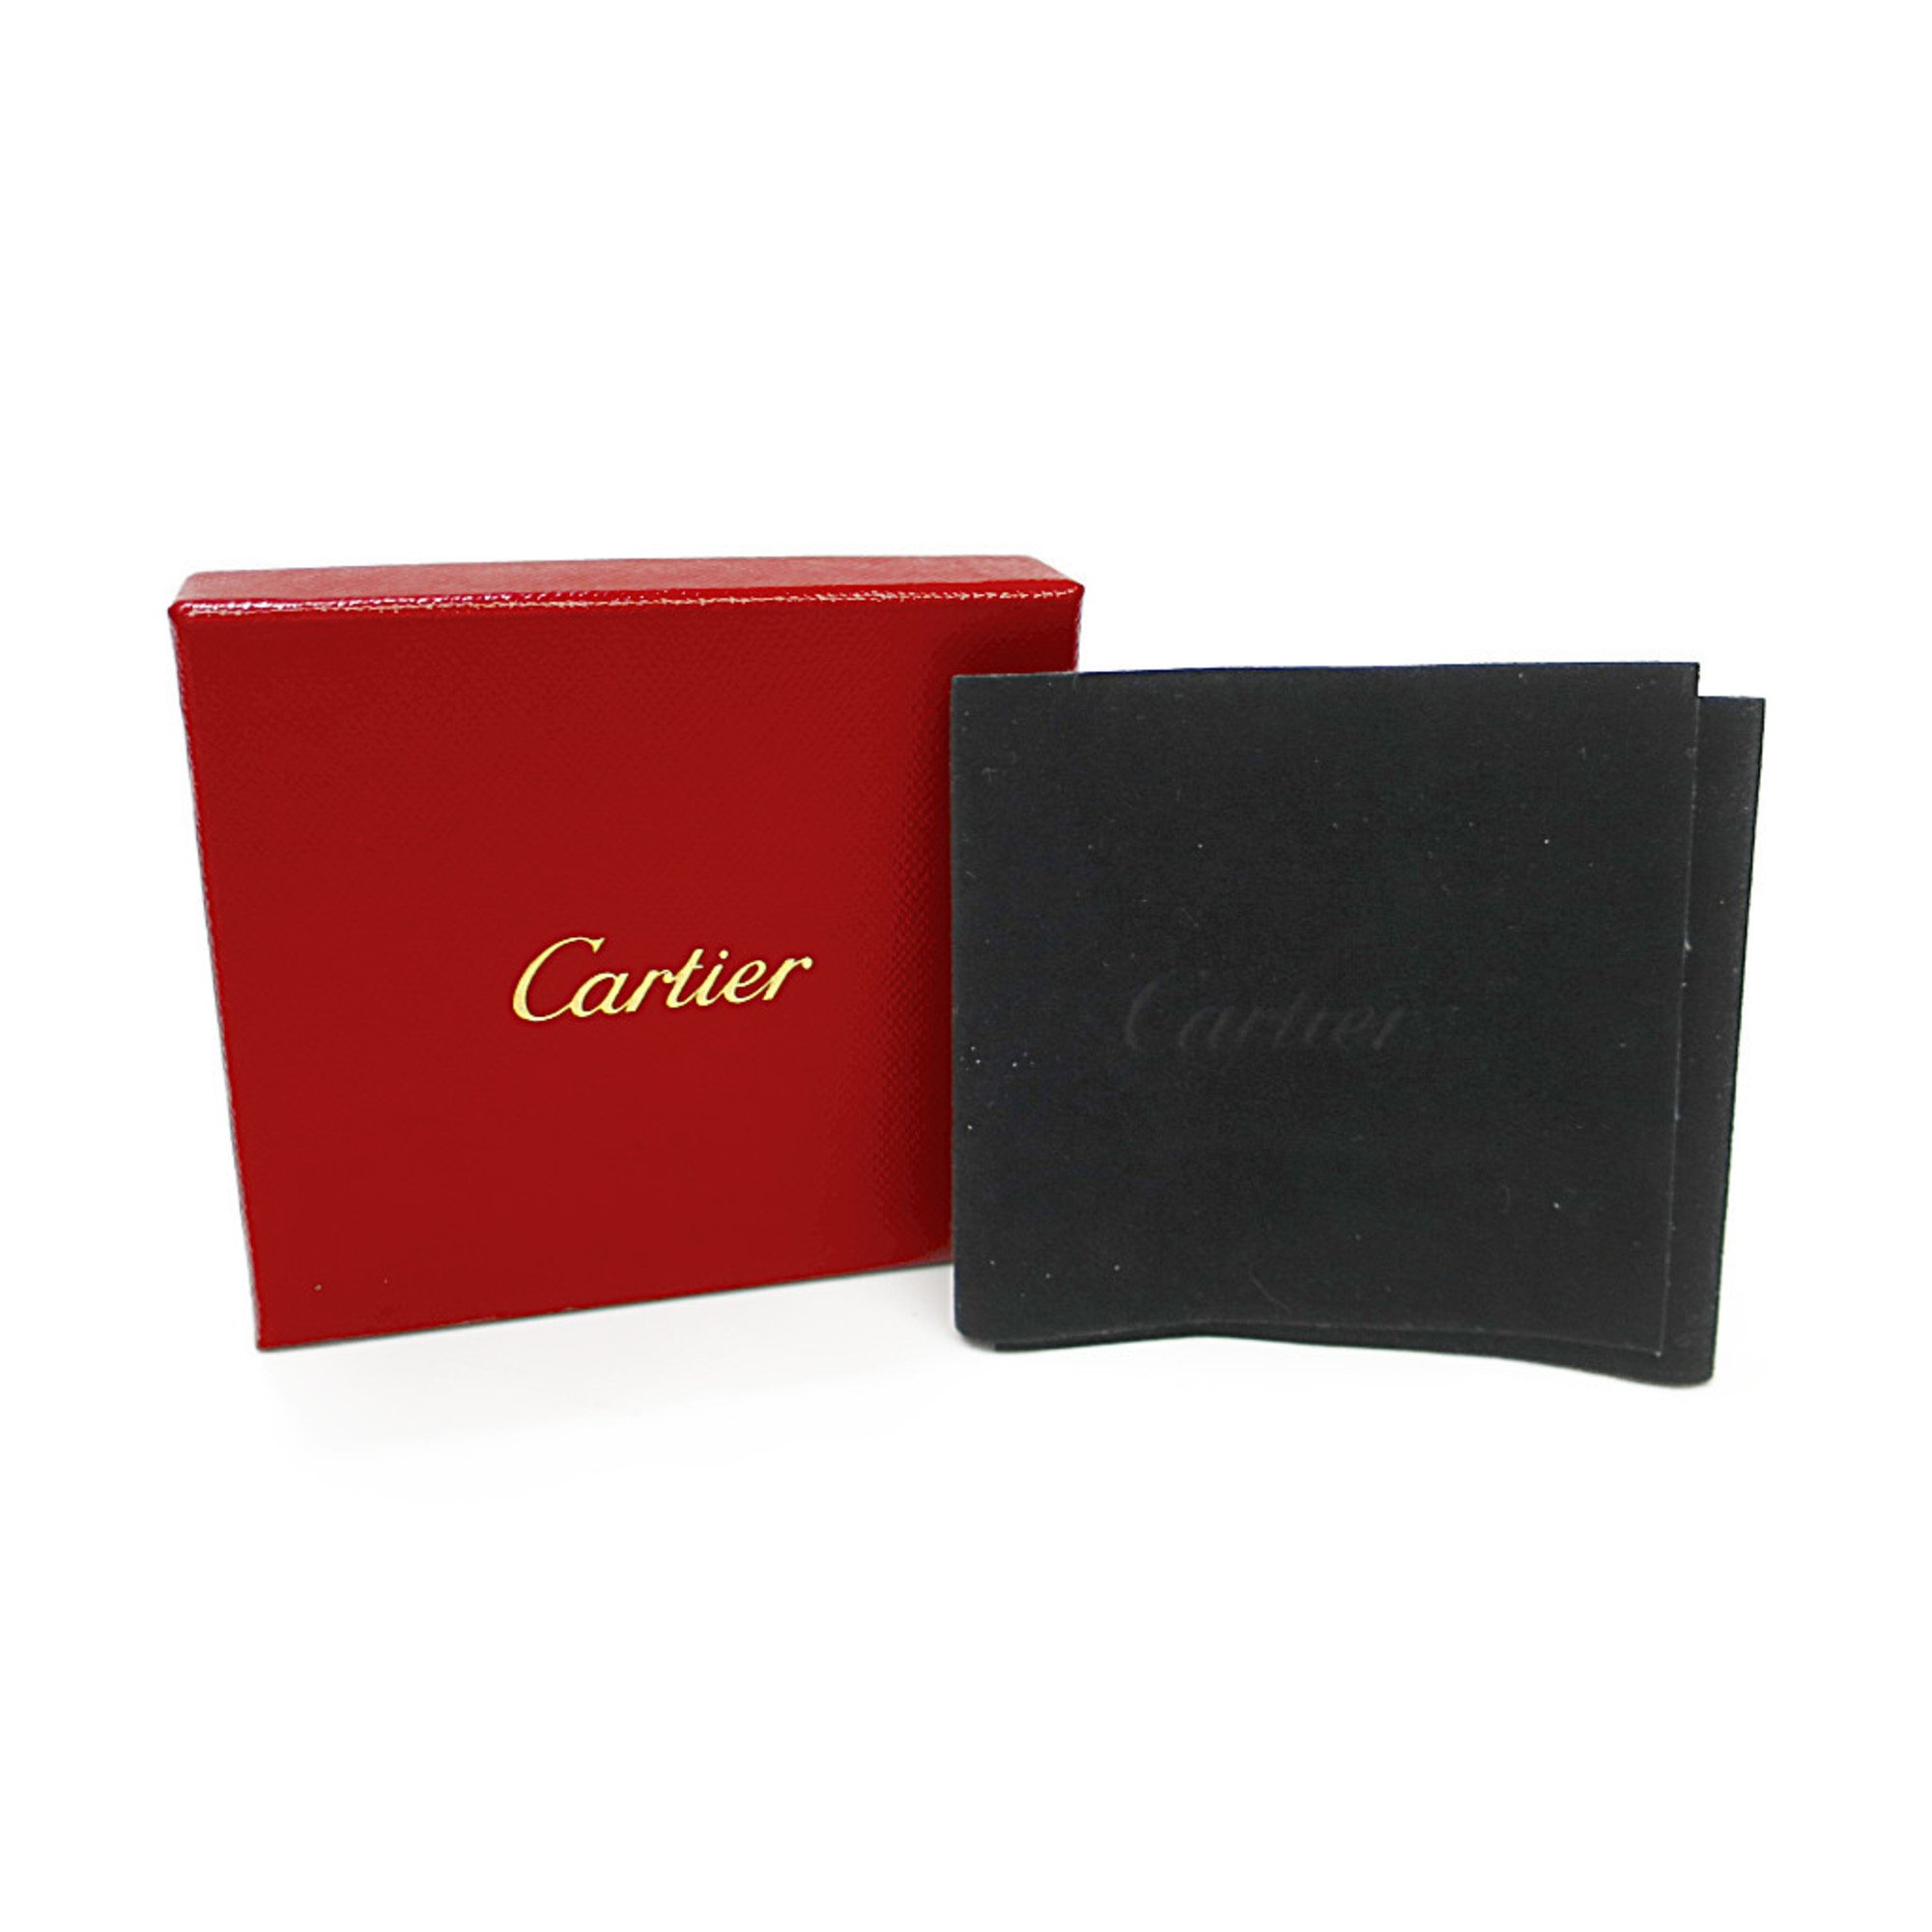 Cartier Trinity Bracelet B6016700 Pink Gold (18K),White Gold (18K),Yellow Gold (18K) No Stone Charm Bracelet Gold